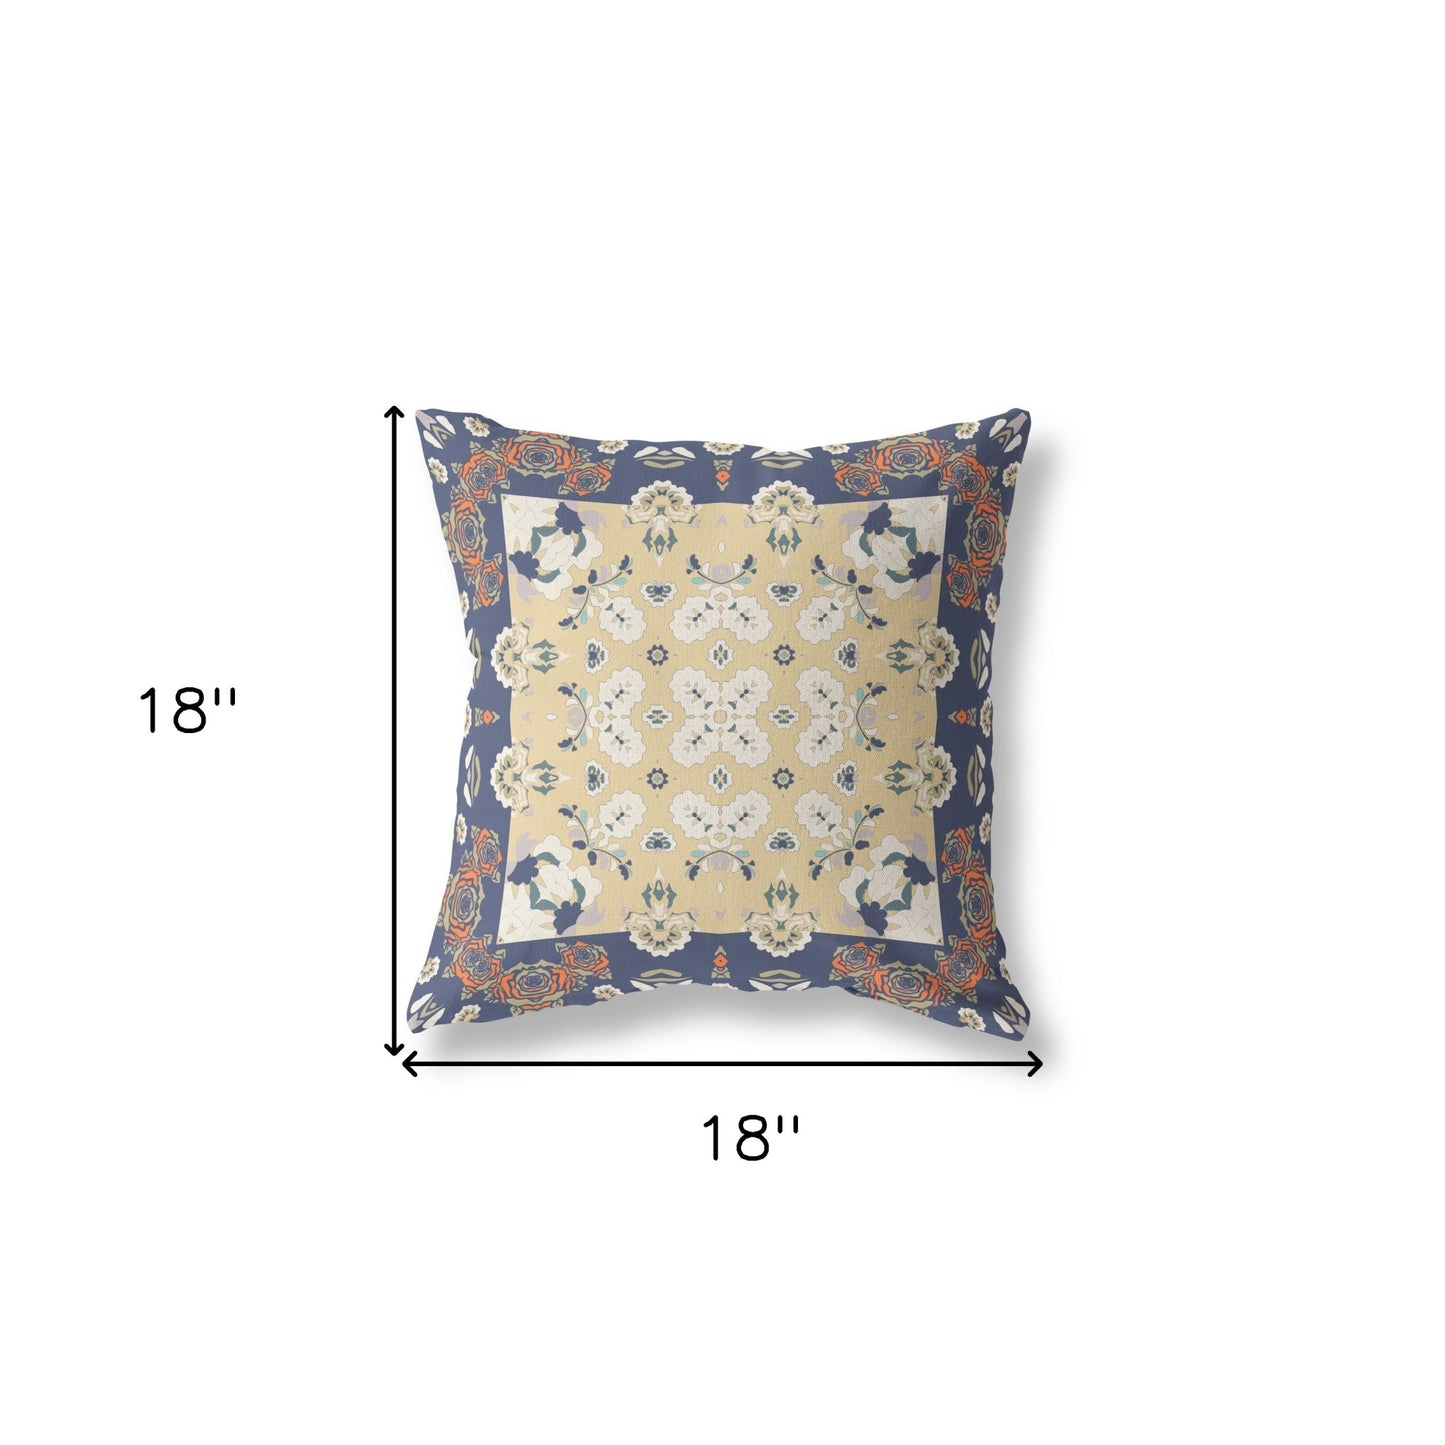 18” Blue Yellow Rose Box Indoor Outdoor Zippered Throw Pillow